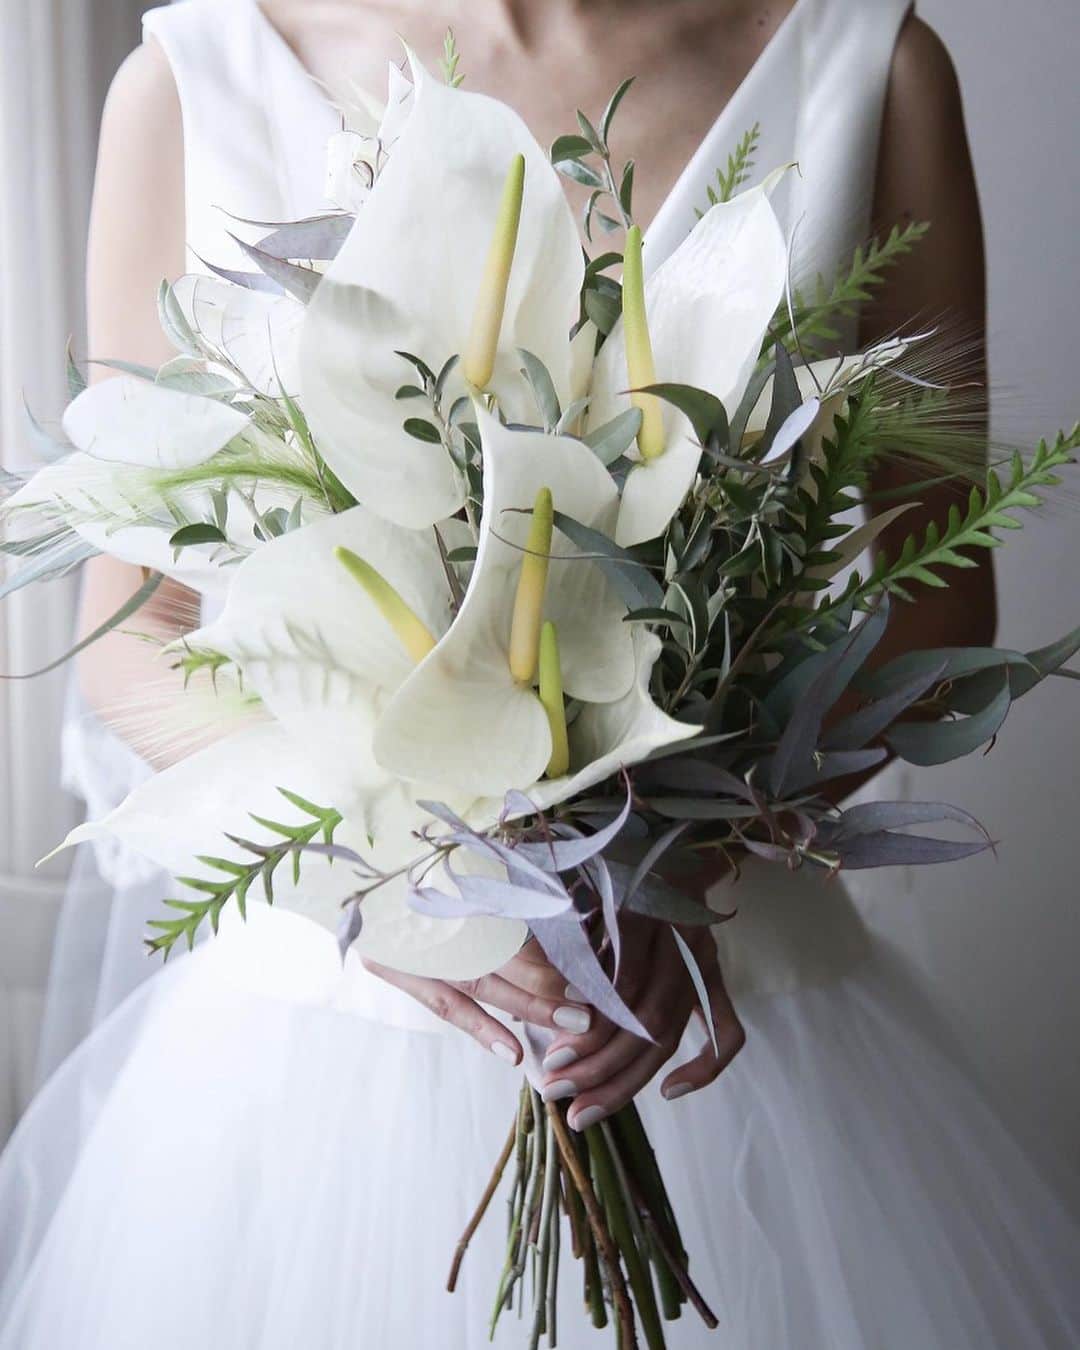 ARCH DAYS Weddingsさんのインスタグラム写真 - (ARCH DAYS WeddingsInstagram)「ウェディングドレスに自然と溶け合うホワイト×グリーンのブーケ🌿﻿ ﻿ ﻿ ホワイトとグリーンで仕上げたブーケには、神聖な花嫁さんの姿をより美しく魅せてくれる効果も✨同じ色を使ったブーケでも、それぞれの色の割合や花材によって雰囲気はガラリとかわるもの。﻿ ﻿ ﻿ 今回は、ARCH DAYS花嫁さんの素敵なホワイト×グリーンのブーケをご紹介！ぜひお気に入りの雰囲気のブーケを見つけてくださいね♡﻿ ﻿ ﻿ ▽このCOLUMNを見るにはストーリーズを☑️﻿ 花嫁さんをより美しく魅せるホワイト×グリーンのブーケ特集！﻿ ﻿ ﻿ ▽ARCH DAYSトップページはこちらから☑﻿ @archdays_weddings﻿ プロフィールのリンクから👰🏻﻿ ﻿ ﻿ ▽バースデー・ベビーシャワーなどの情報を見るなら💁🎉﻿ @archdays﻿ ﻿ ﻿ ----------------------﻿ #archdays #archdays_wedding #アーチデイズ #アーチデイズウェディング #ホワイトブーケ #グリーンブーケ #シングルブーケ #カラーブーケ #胡蝶蘭ブーケ #アンスリウムブーケ #ブーケ #ブーケ💐 #ウェディングブーケ #ウエディングブーケ #結婚式ブーケ #ウェディングフラワー #ブライダルブーケ #花嫁ブーケ #ブートニア #ブーケブートニア #ウェディングフラワー #結婚式準備 #ウェディング準備 #花嫁準備 #2020春婚 #2020夏婚 #2020秋婚 #2020冬婚﻿ ----------------------﻿ https://archdays.com/column/2019/10/17/48676﻿ ----------------------」10月17日 19時36分 - archdays_weddings